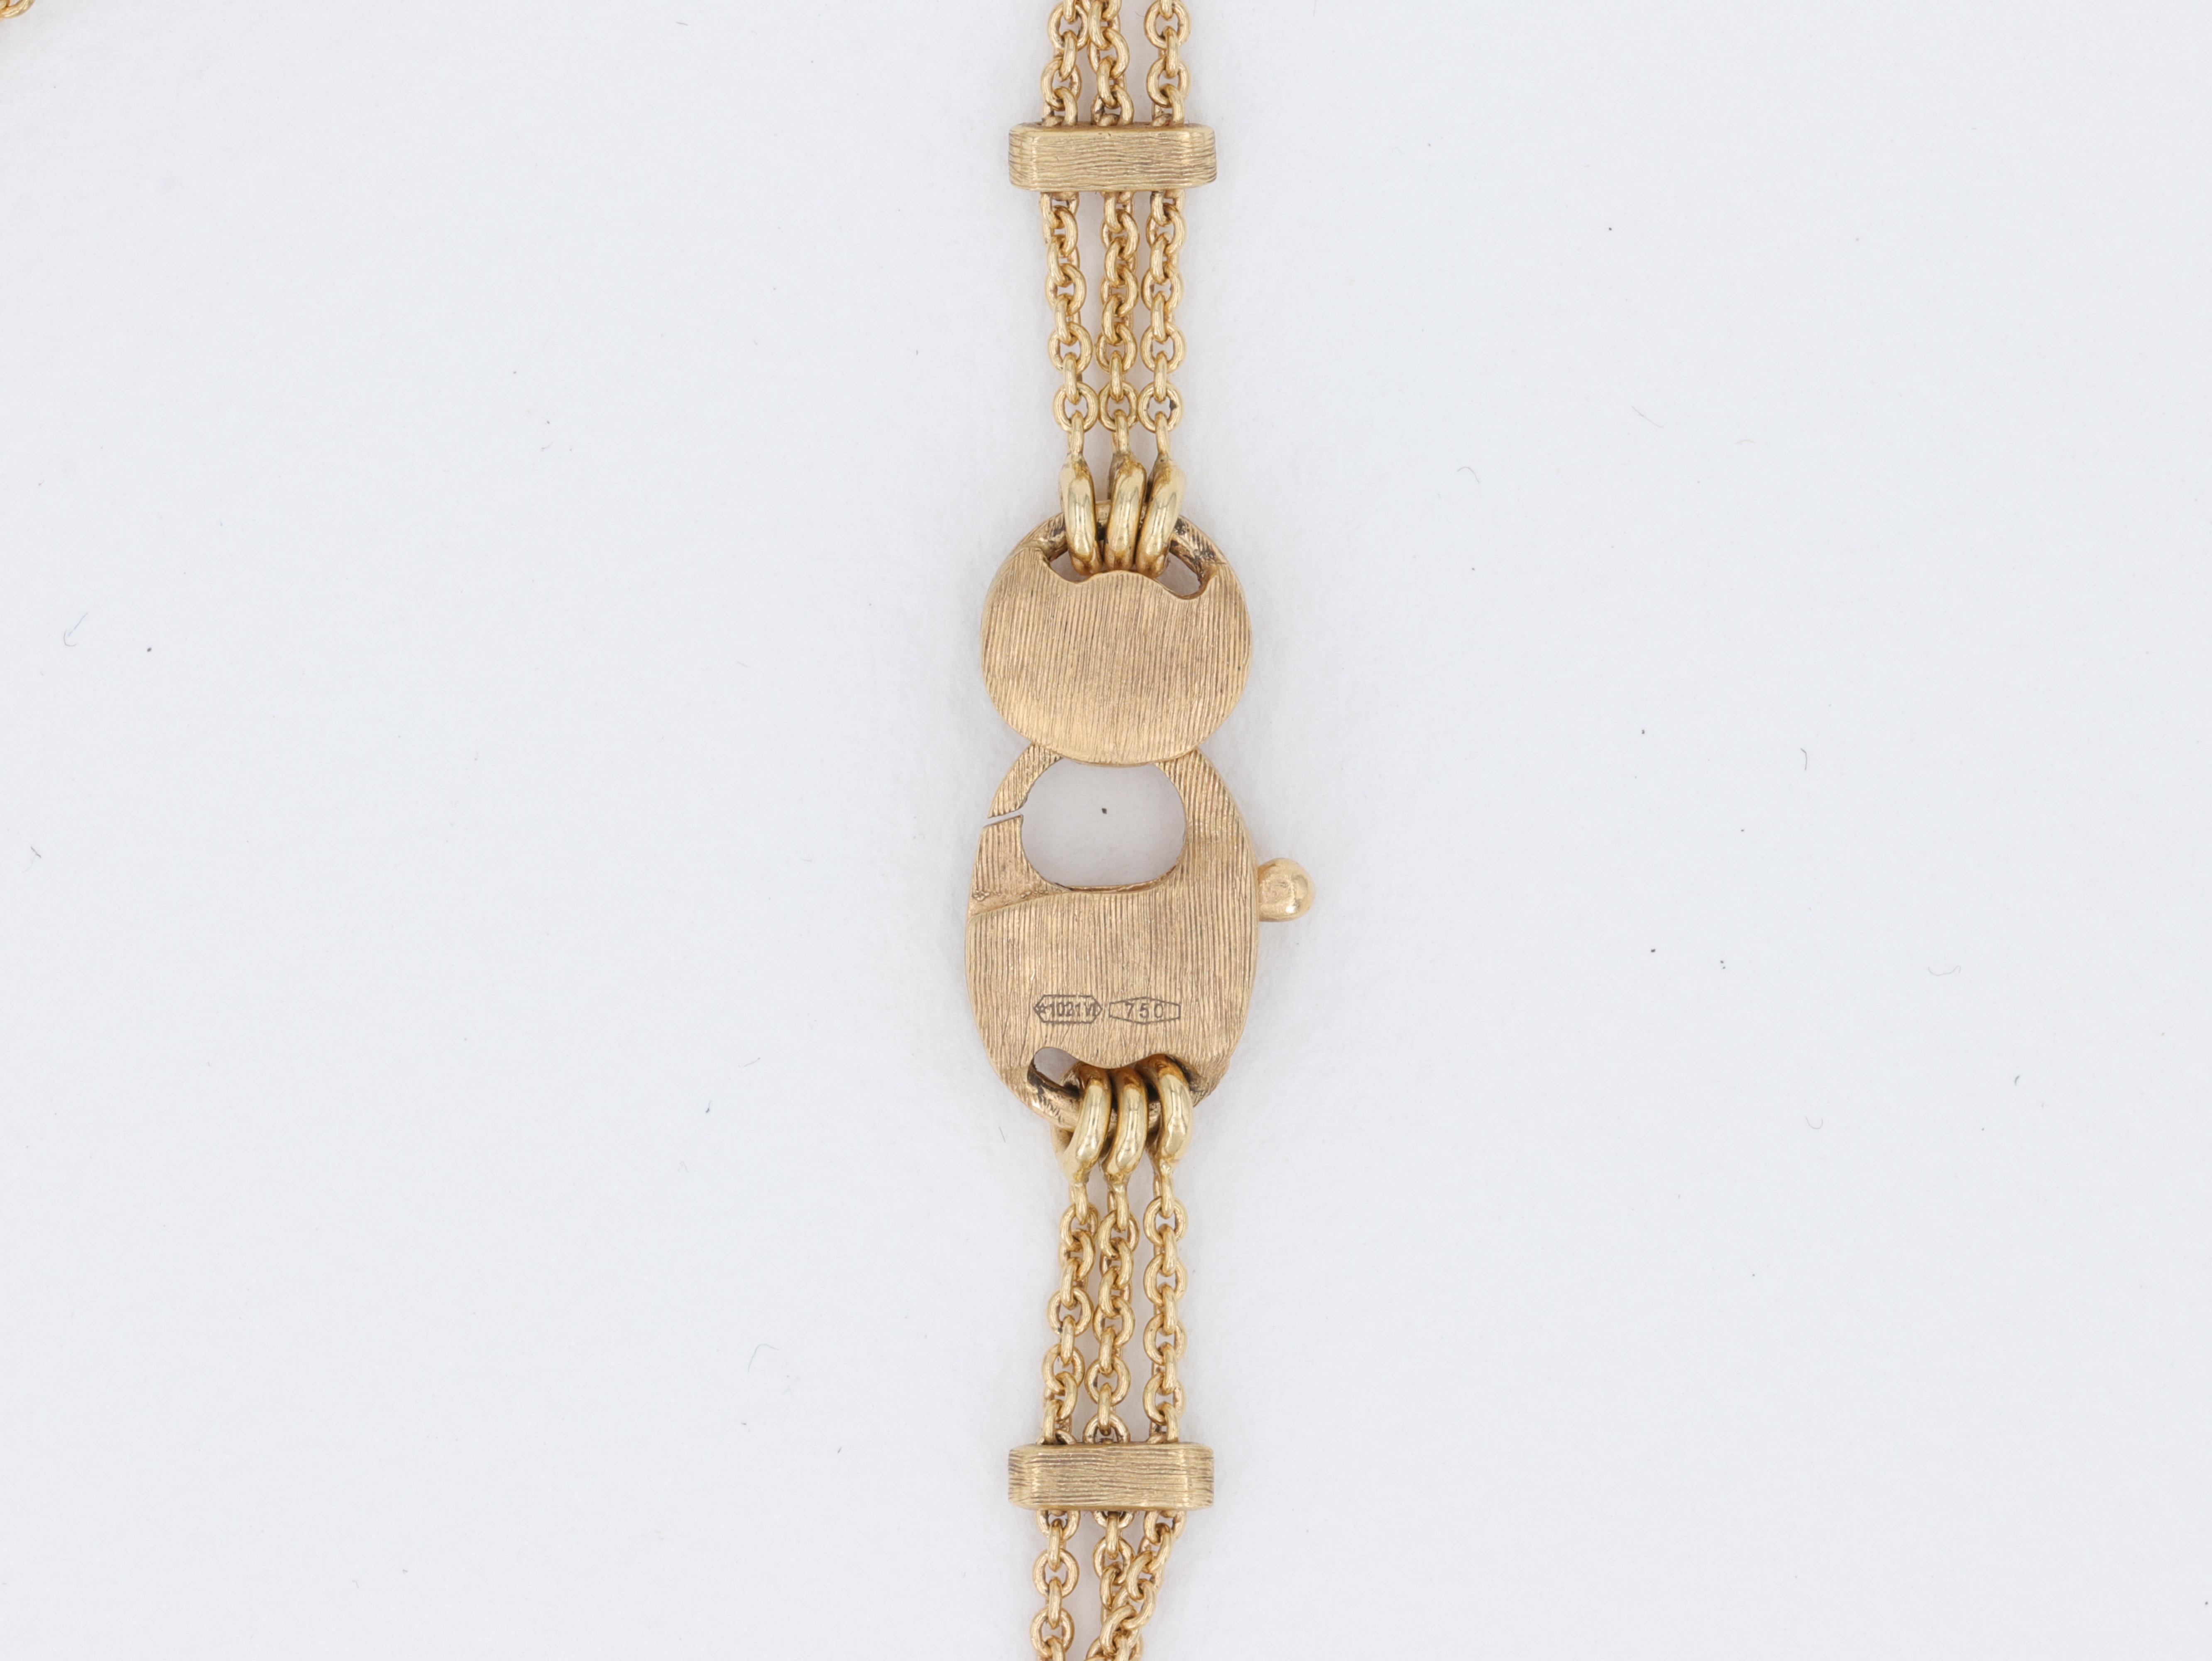 three strand gold necklace